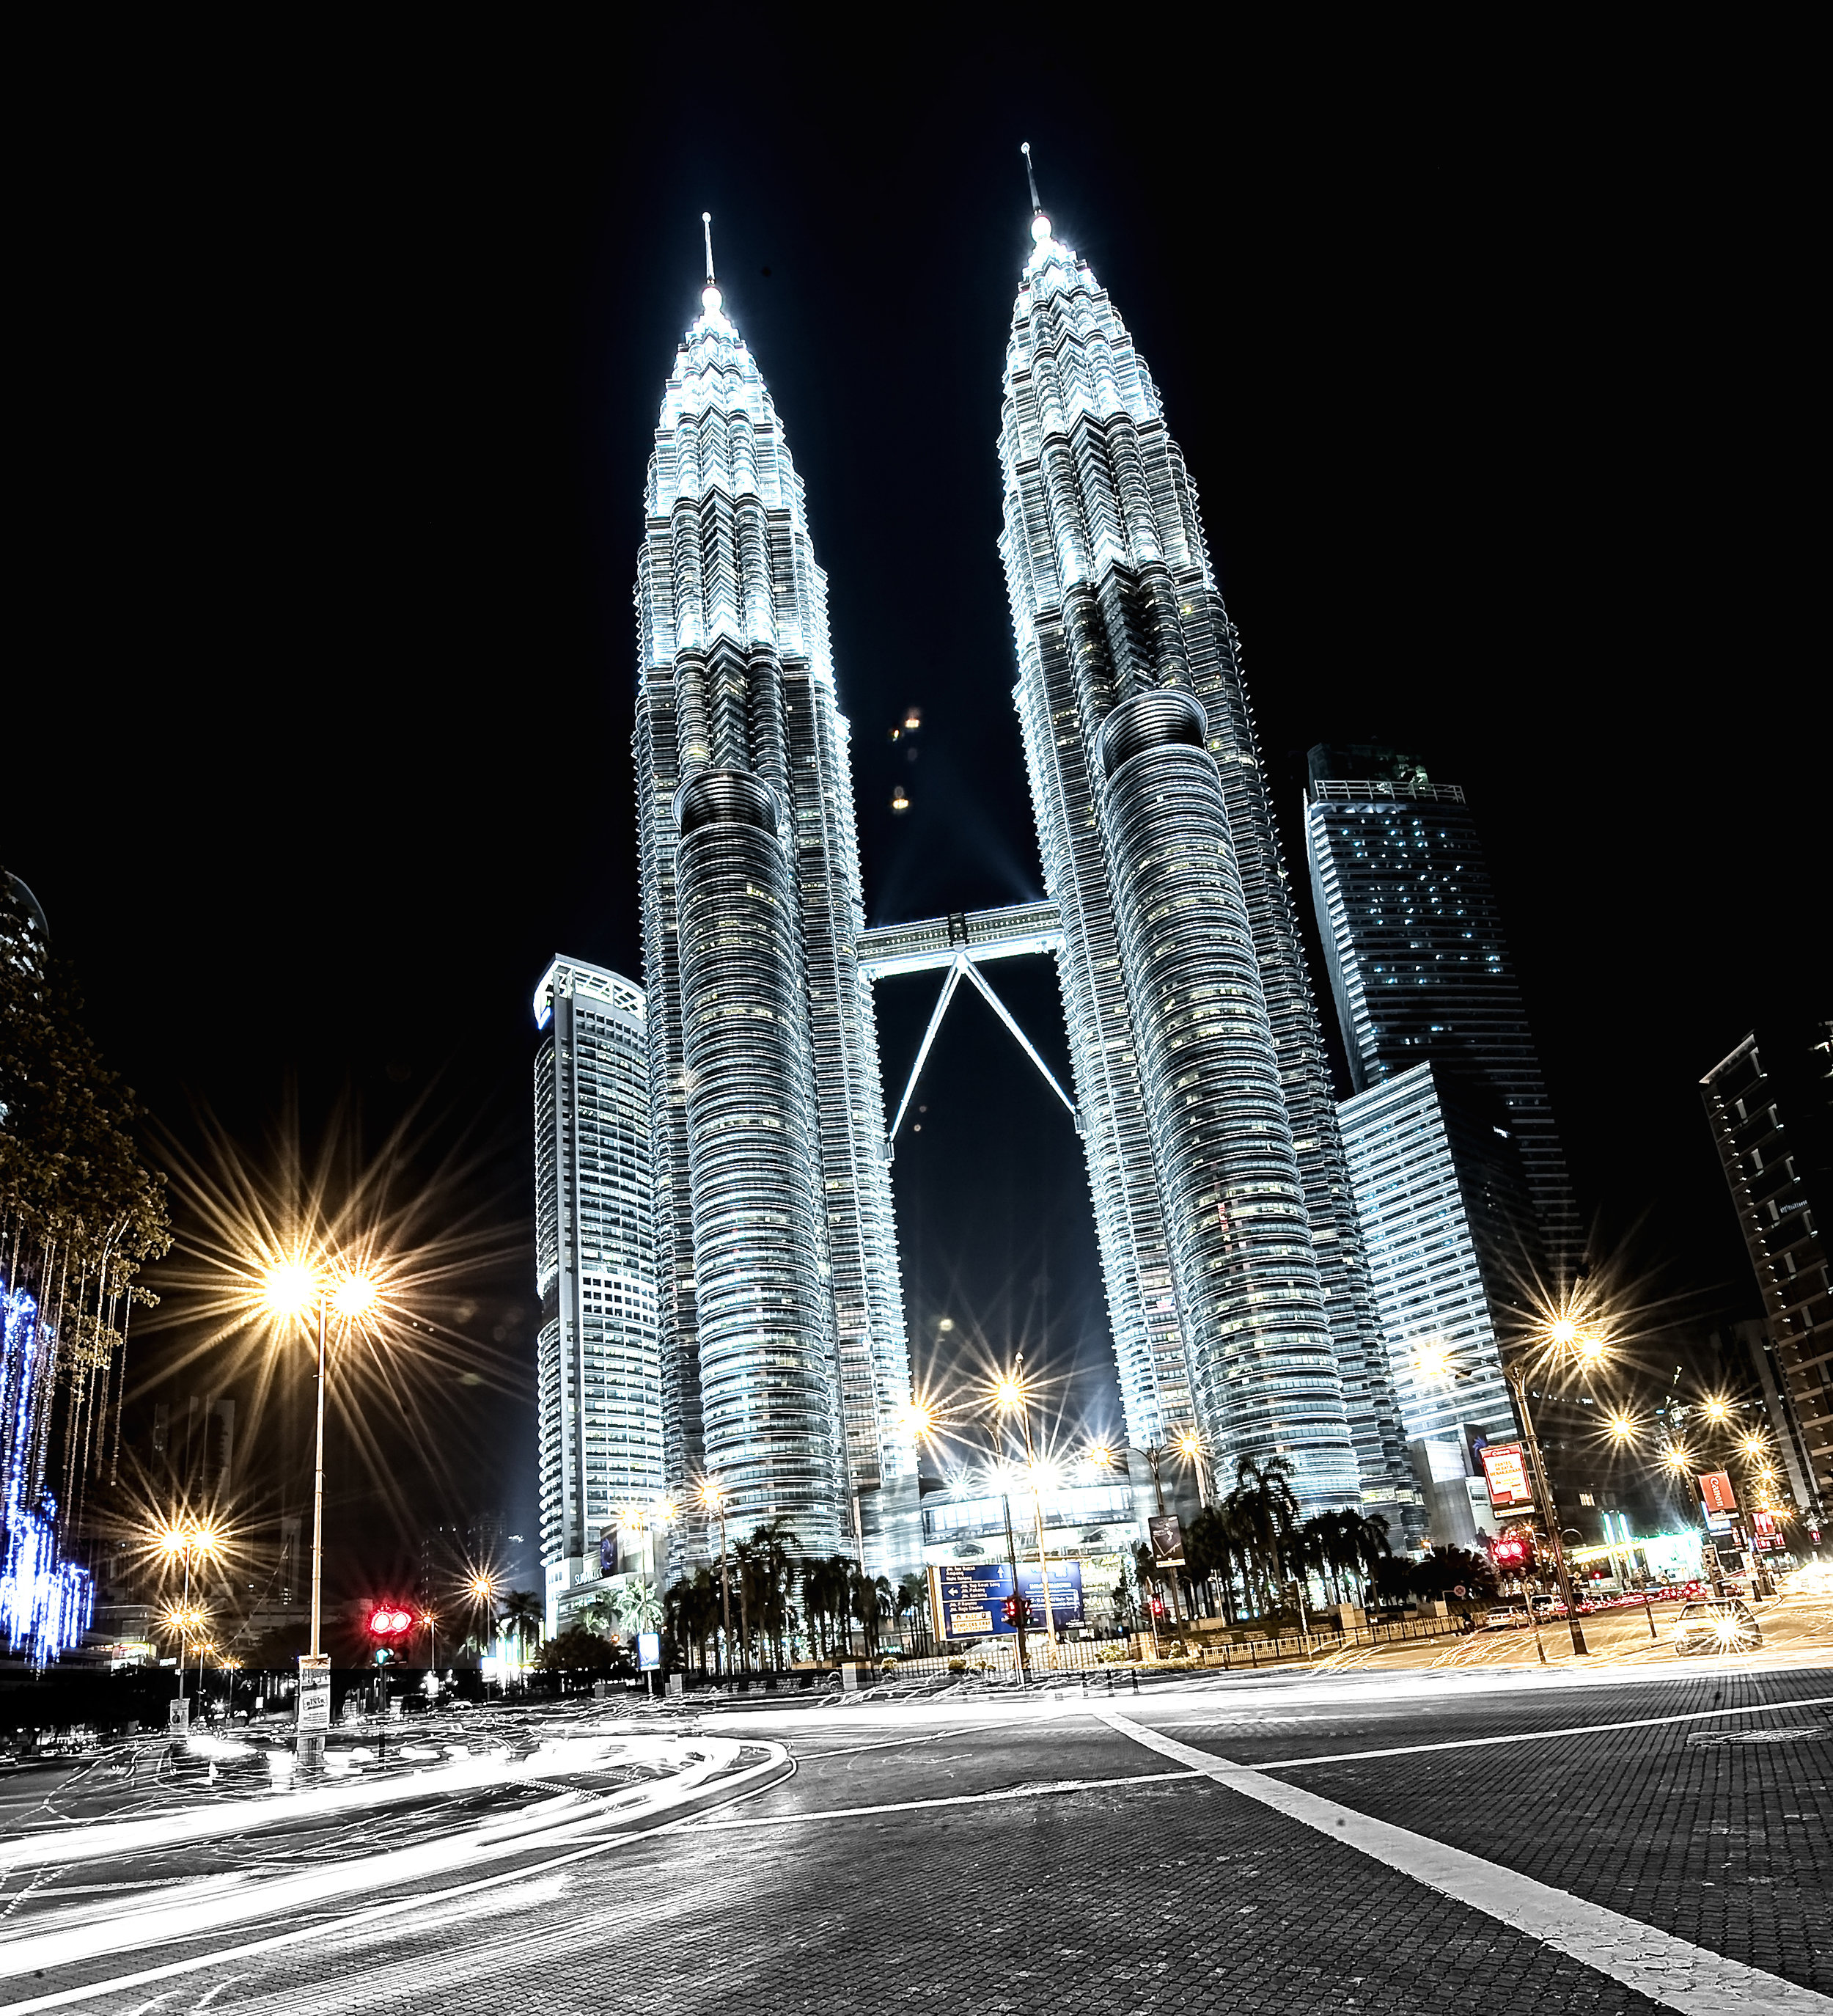 Pertronas Towers Kuala Lumpur Malaysia for LXRY-magazine